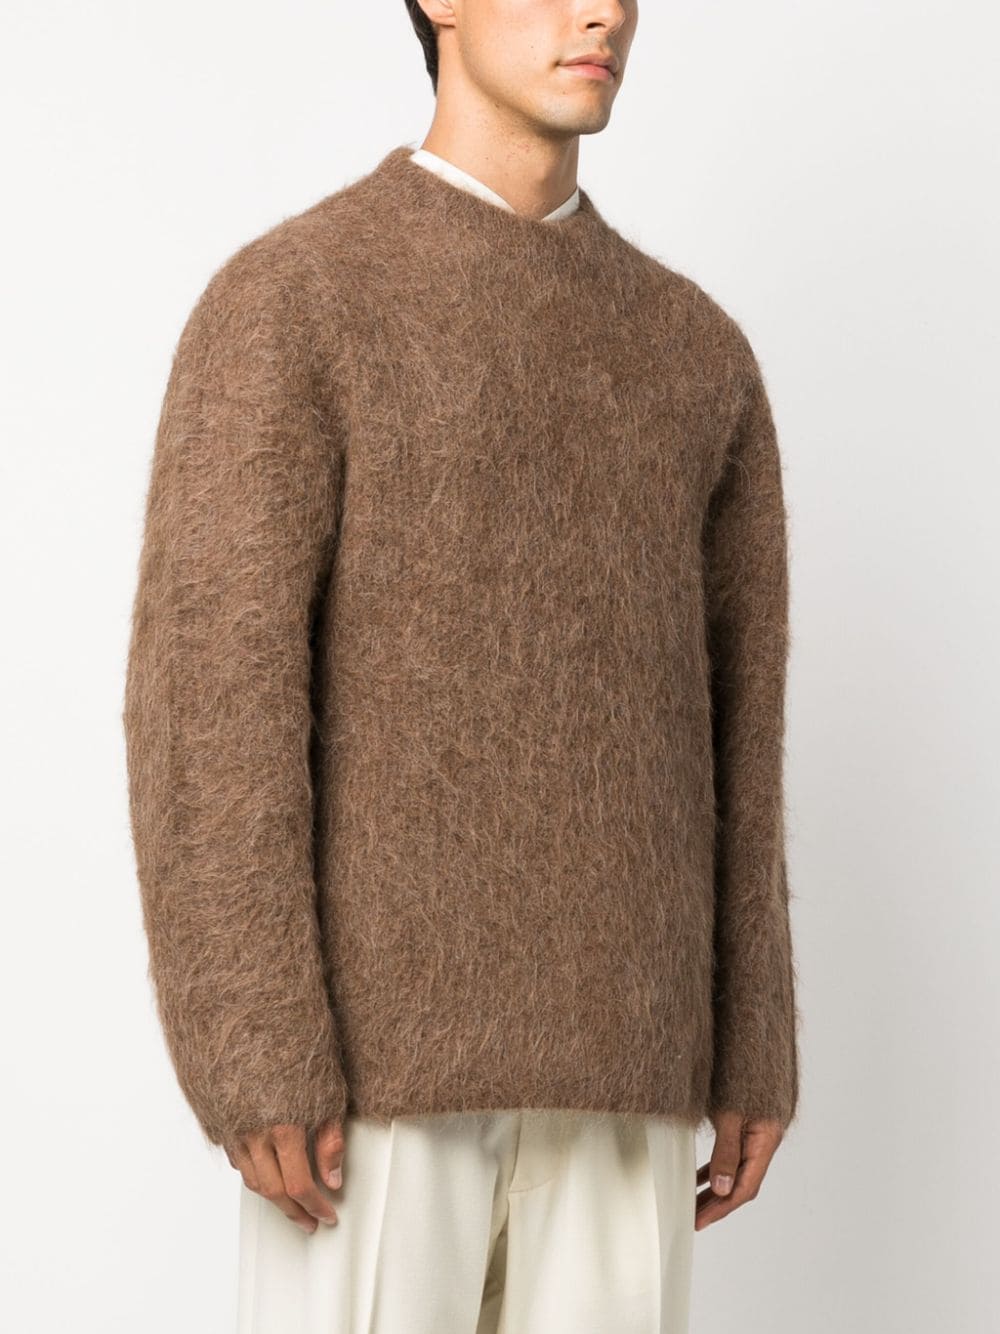 brown harubla sweater